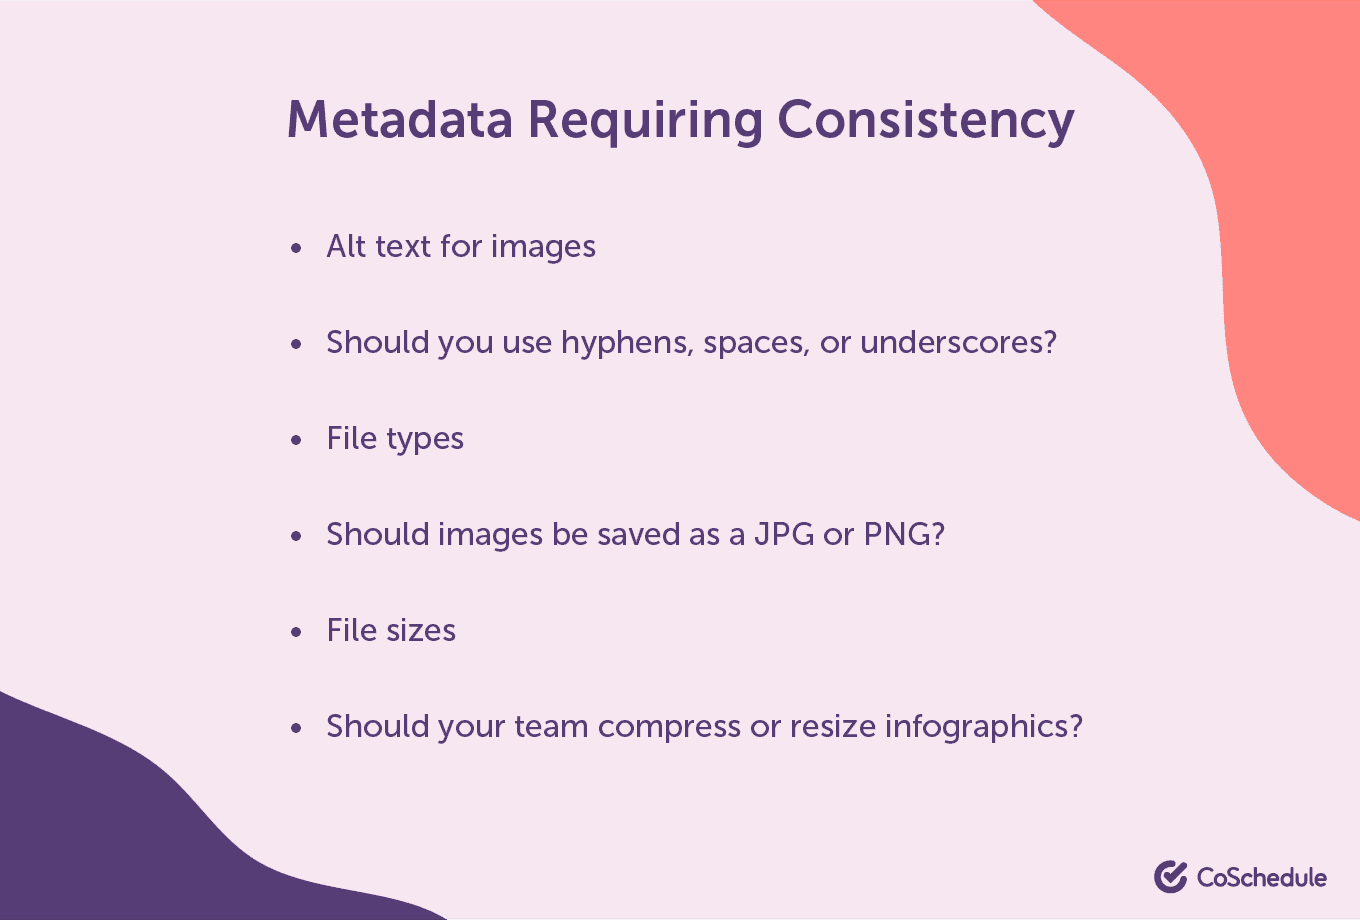 Metadata that requires consistency